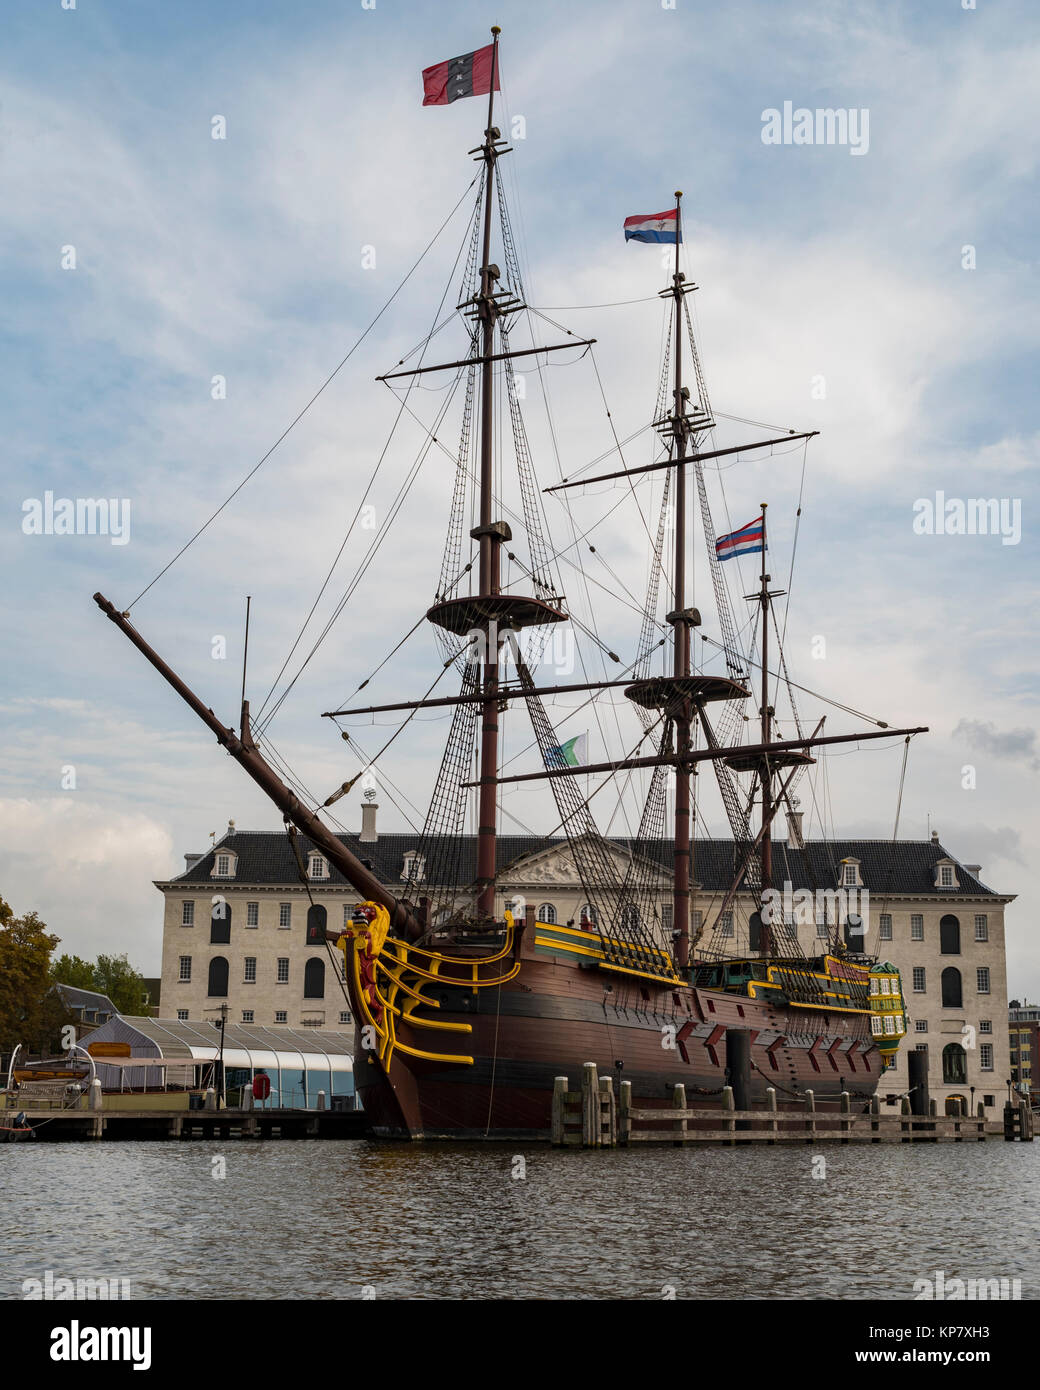 L'Amsterdam, trois-mâts, clipper ship, réplique, Dutch East India Company, navire Maritime Museum, Amsterdam, Hollande, Pays-Bas, Europe Banque D'Images